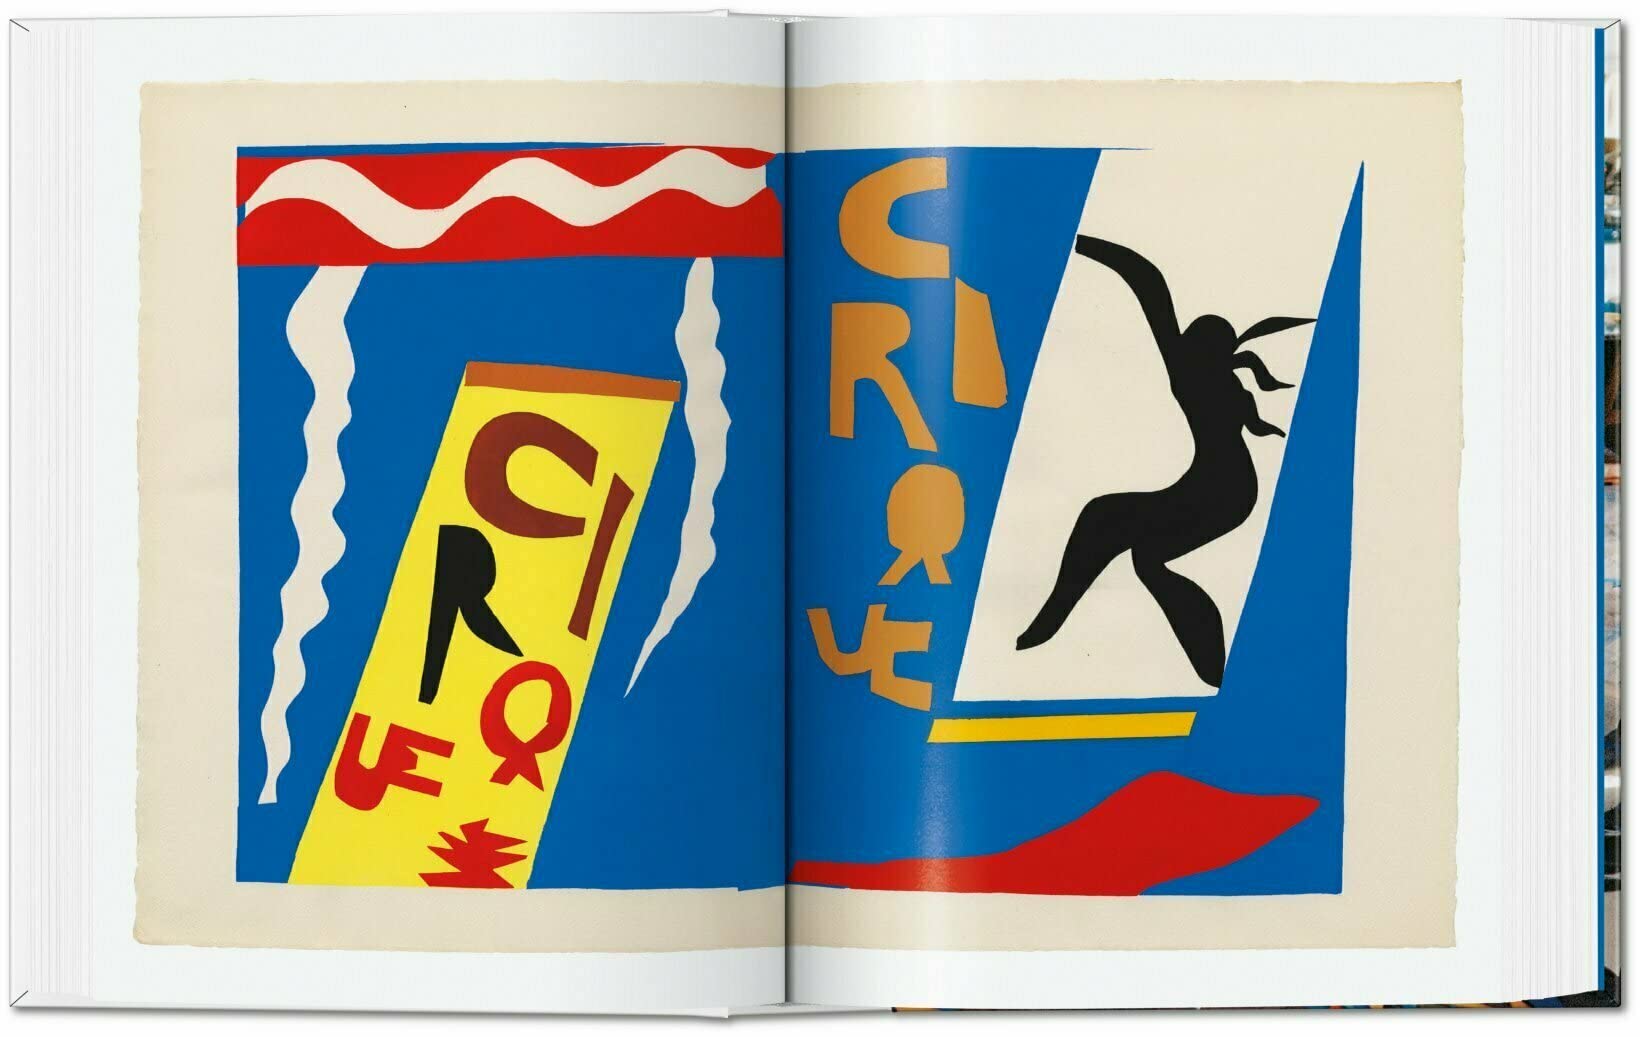 40 Matisse’a. Wycięcia